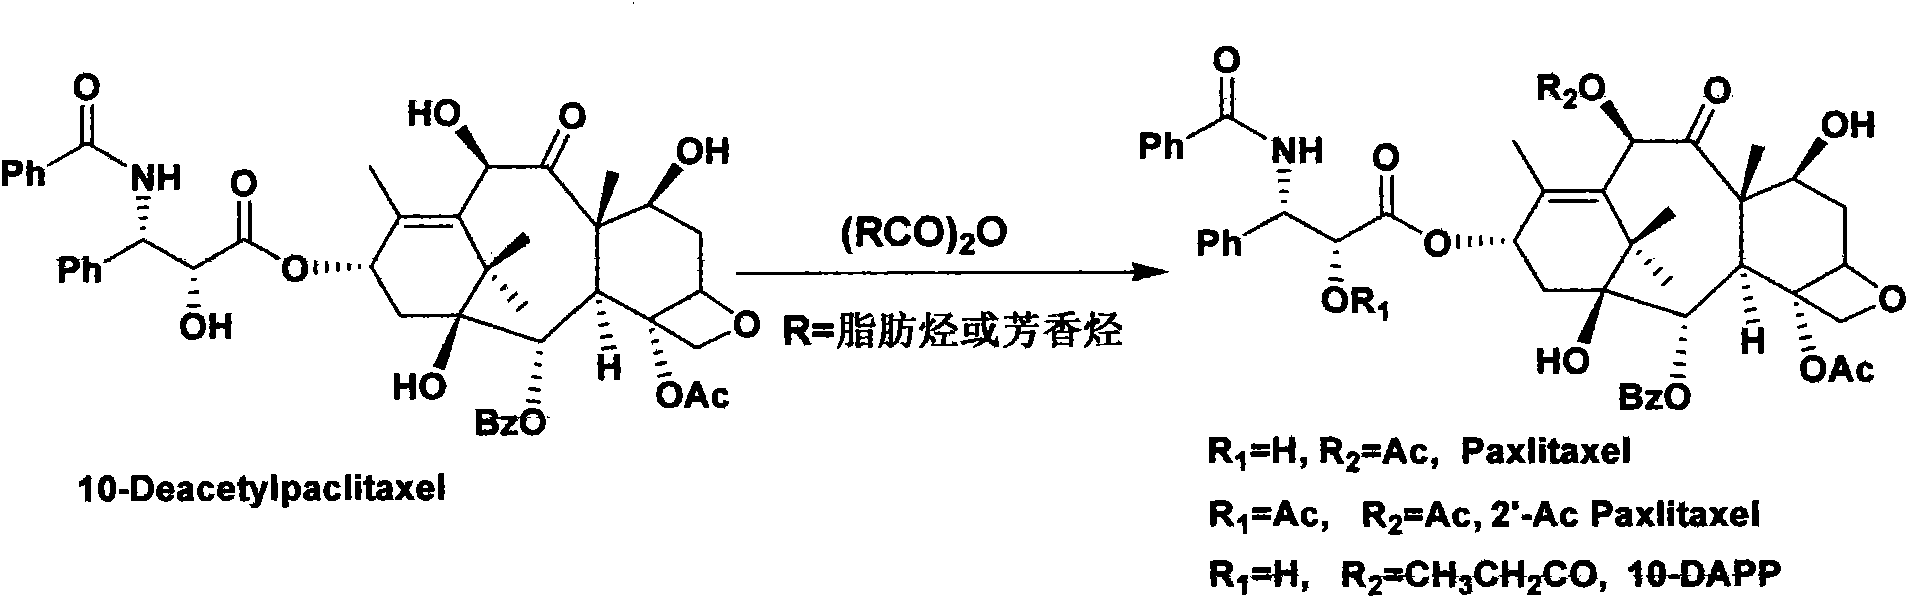 Method of preparing taxol by separating 10-deacetyl taxol acylate